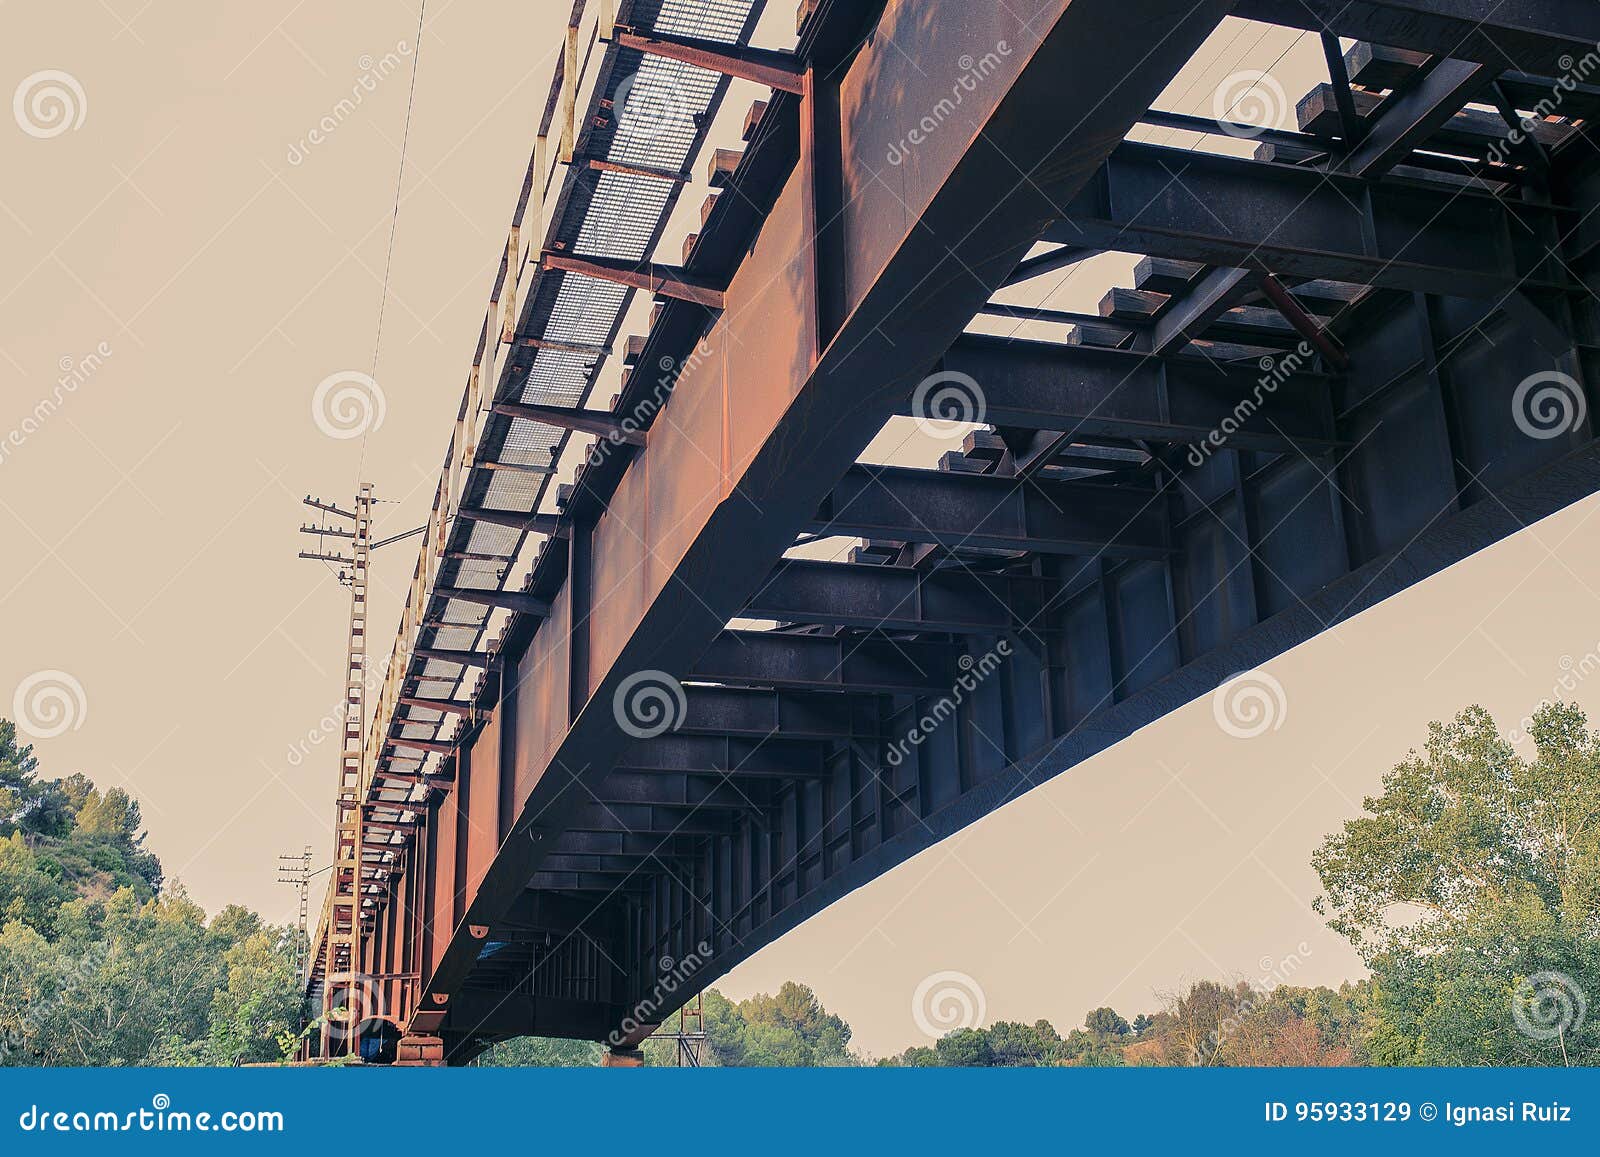 oxid iron train bridge in gelida, barcelona,spain